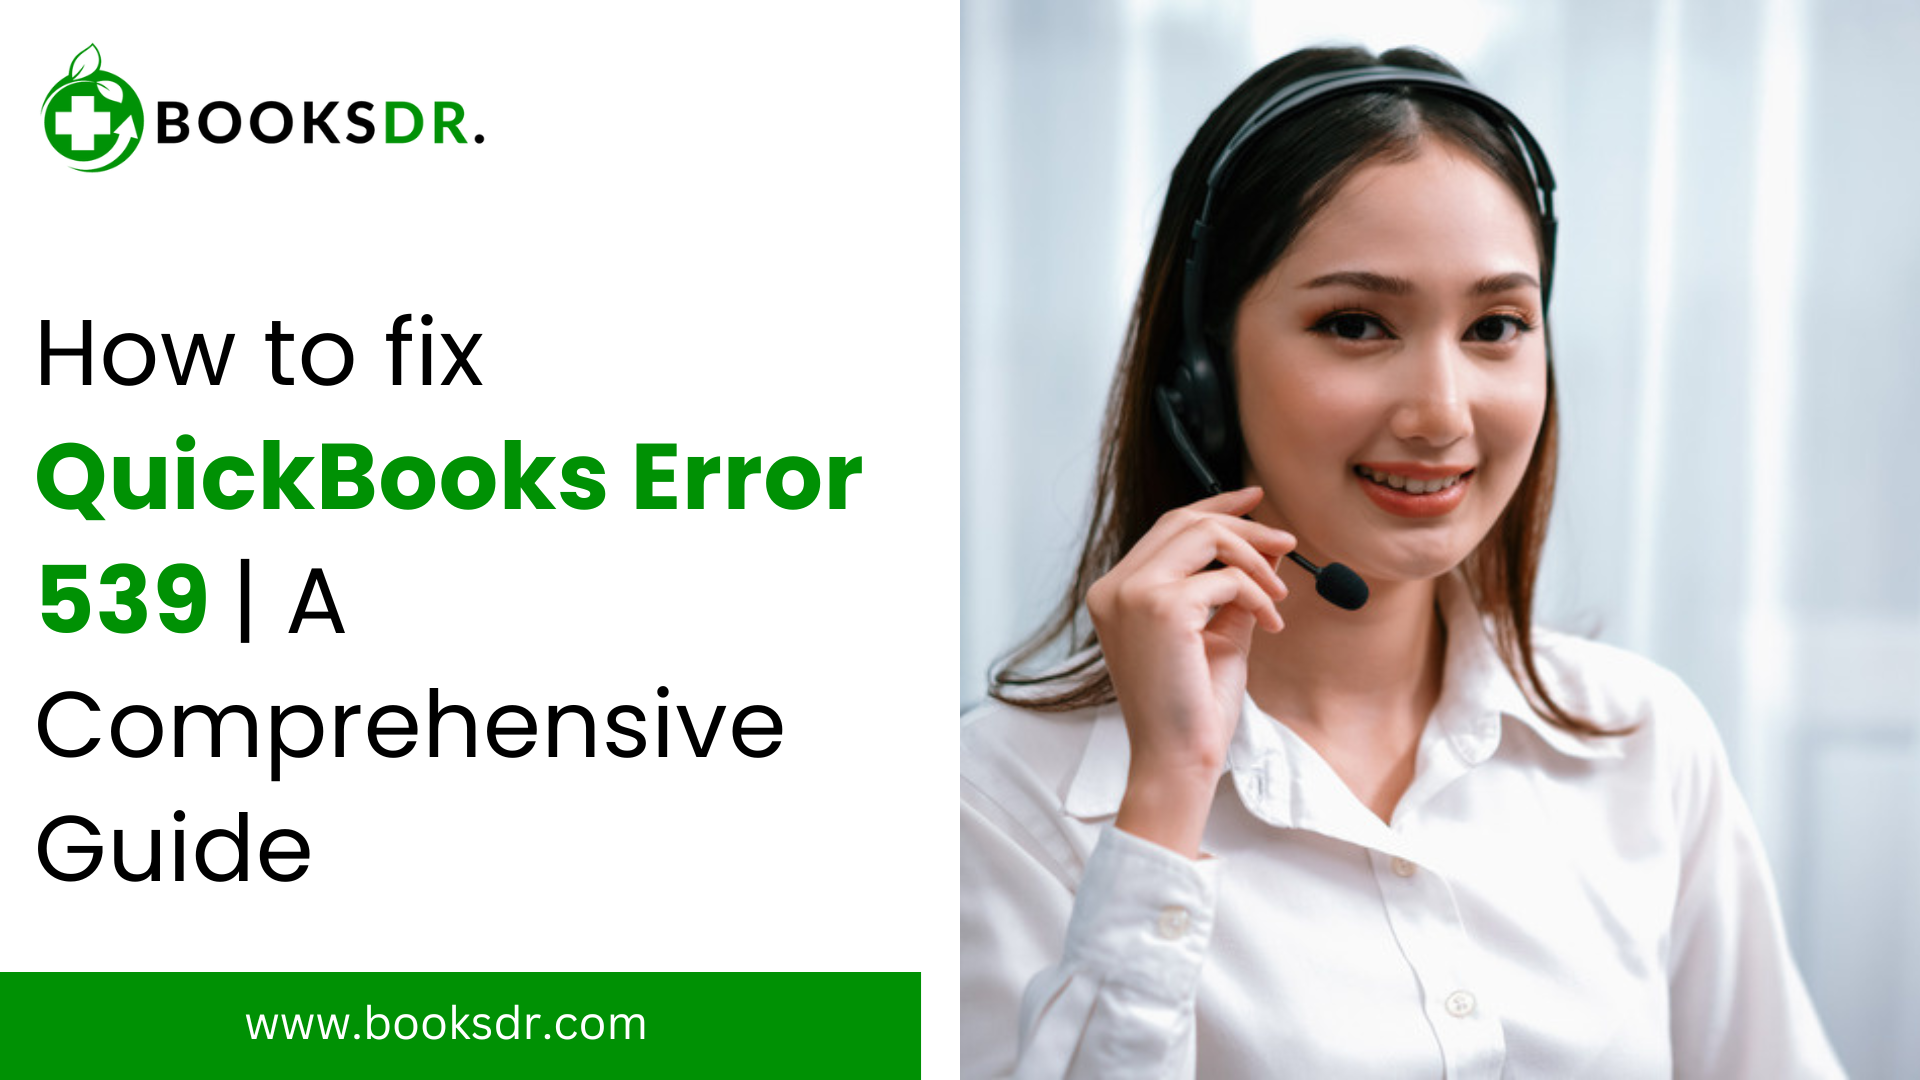 How to fix QuickBooks Error 539?